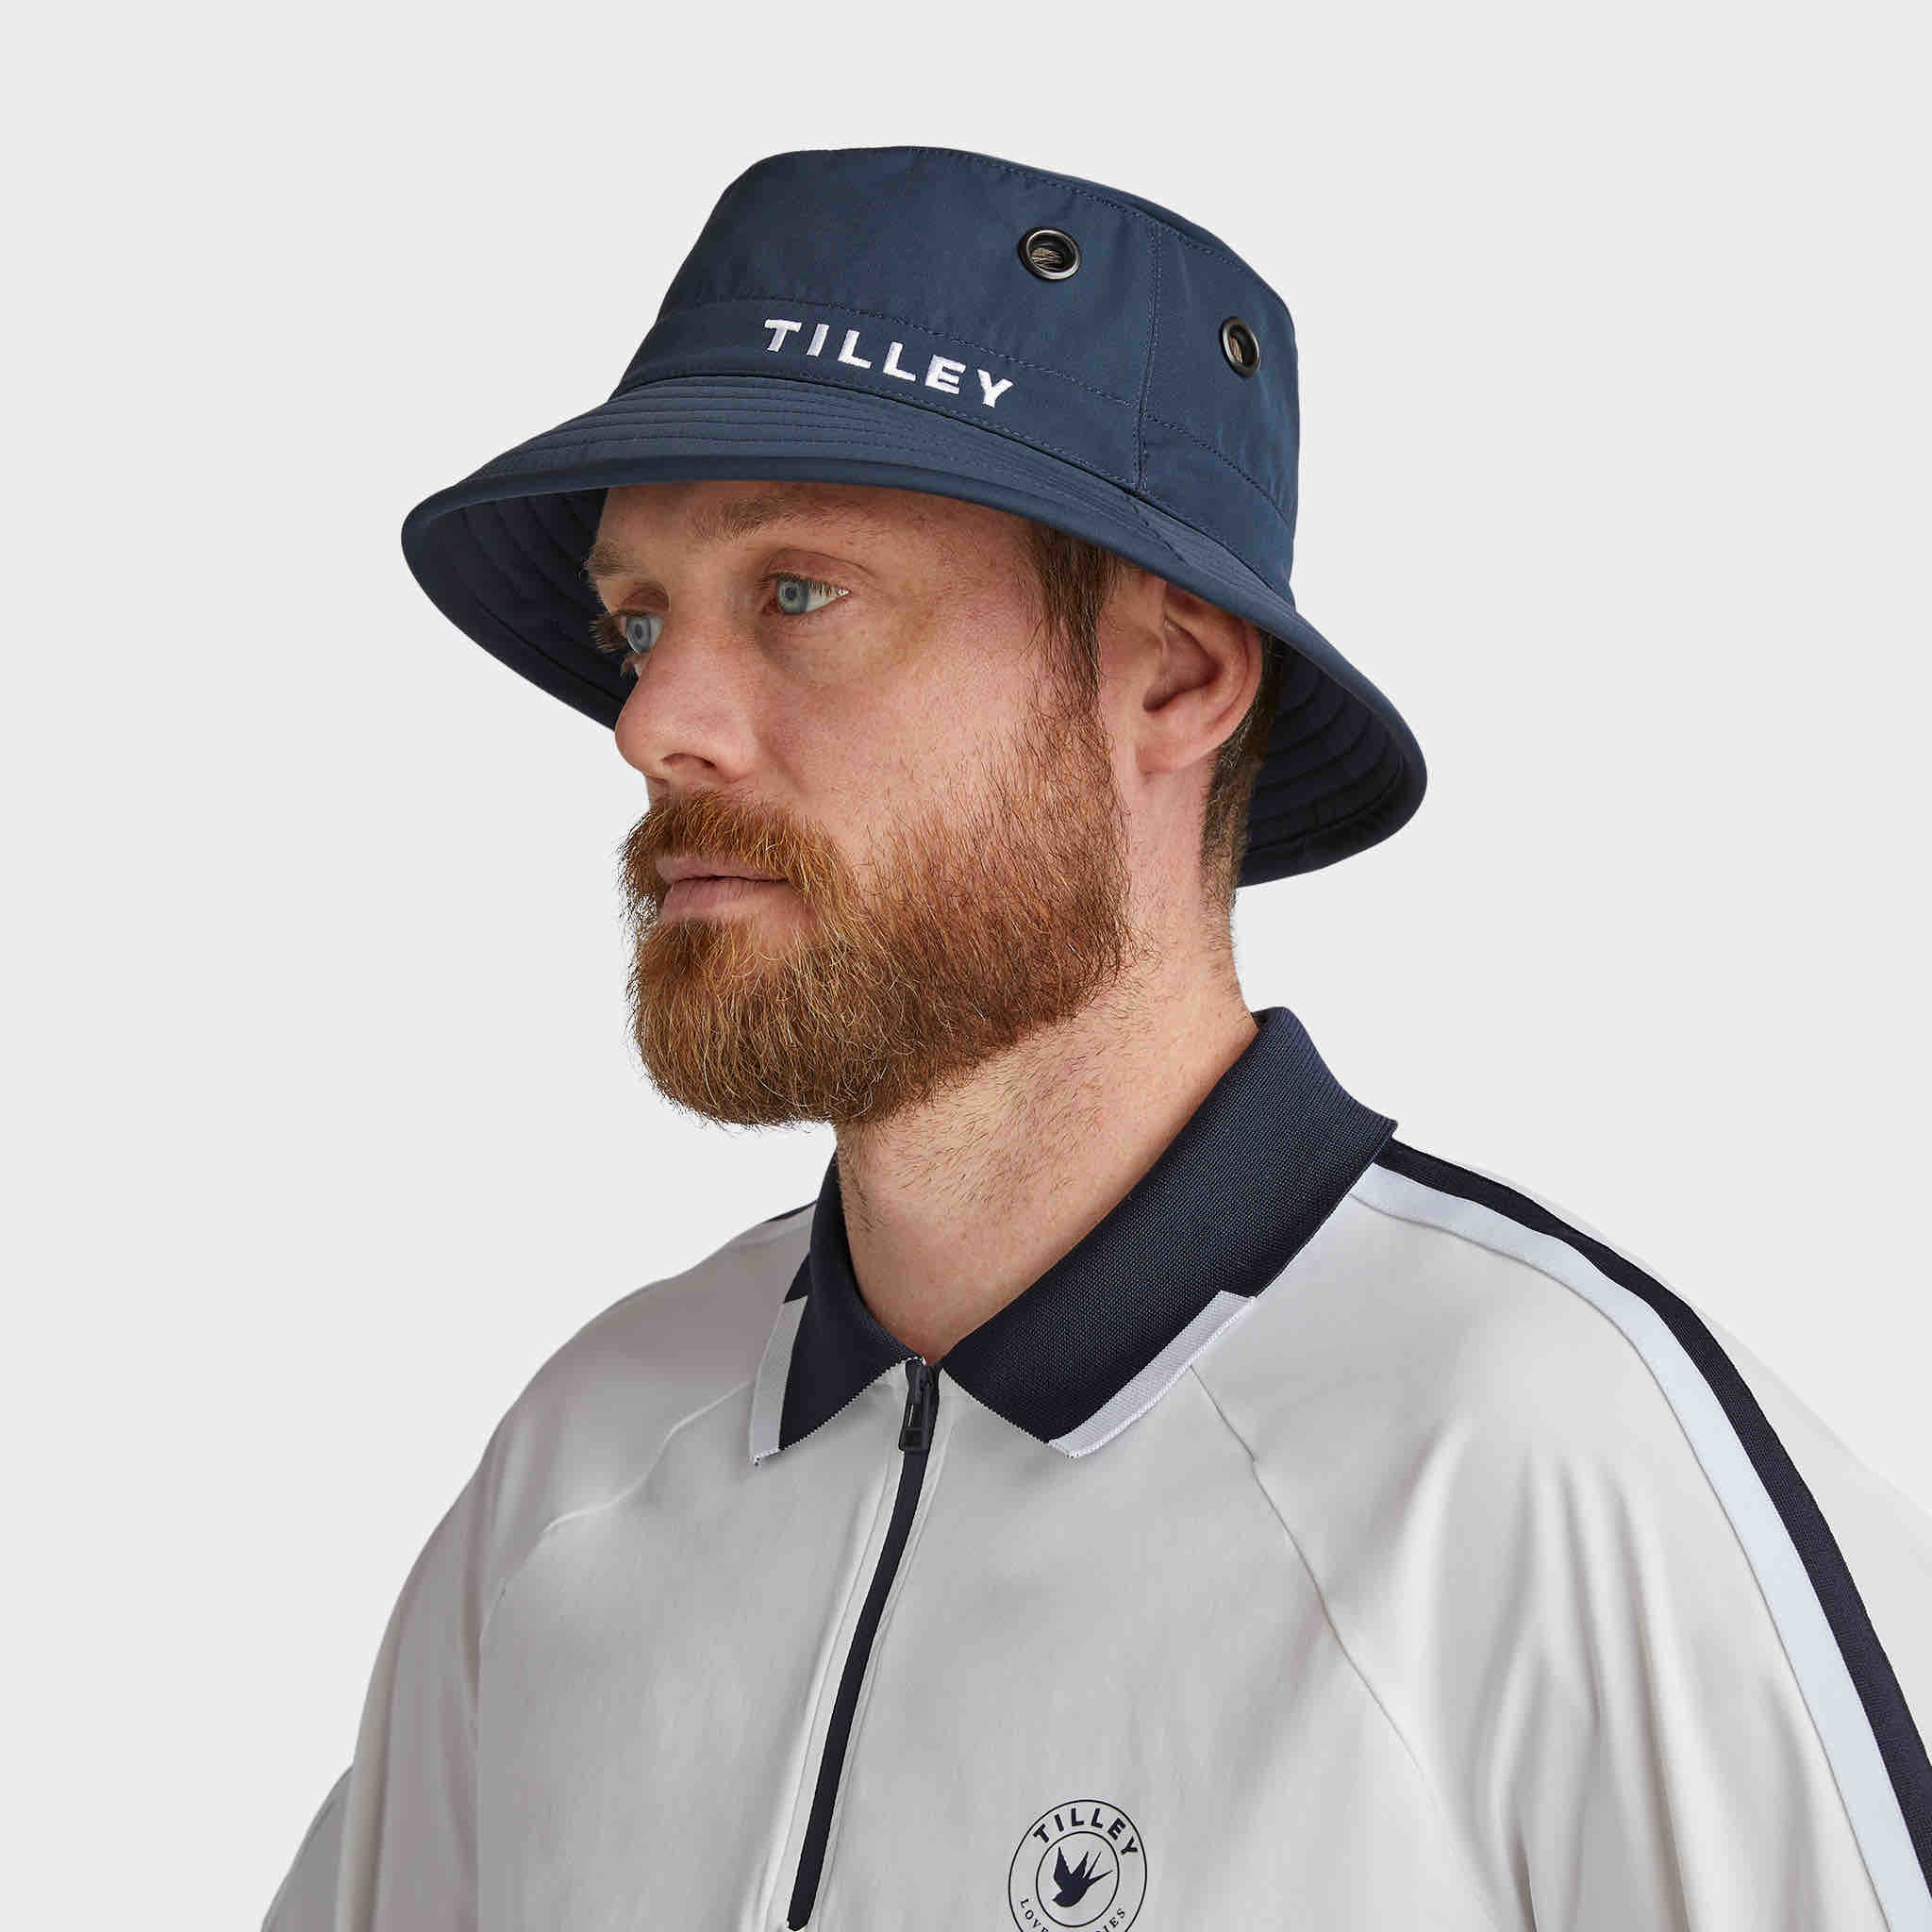 Buy Golf Hats & Golf Caps for Men - Henri Henri